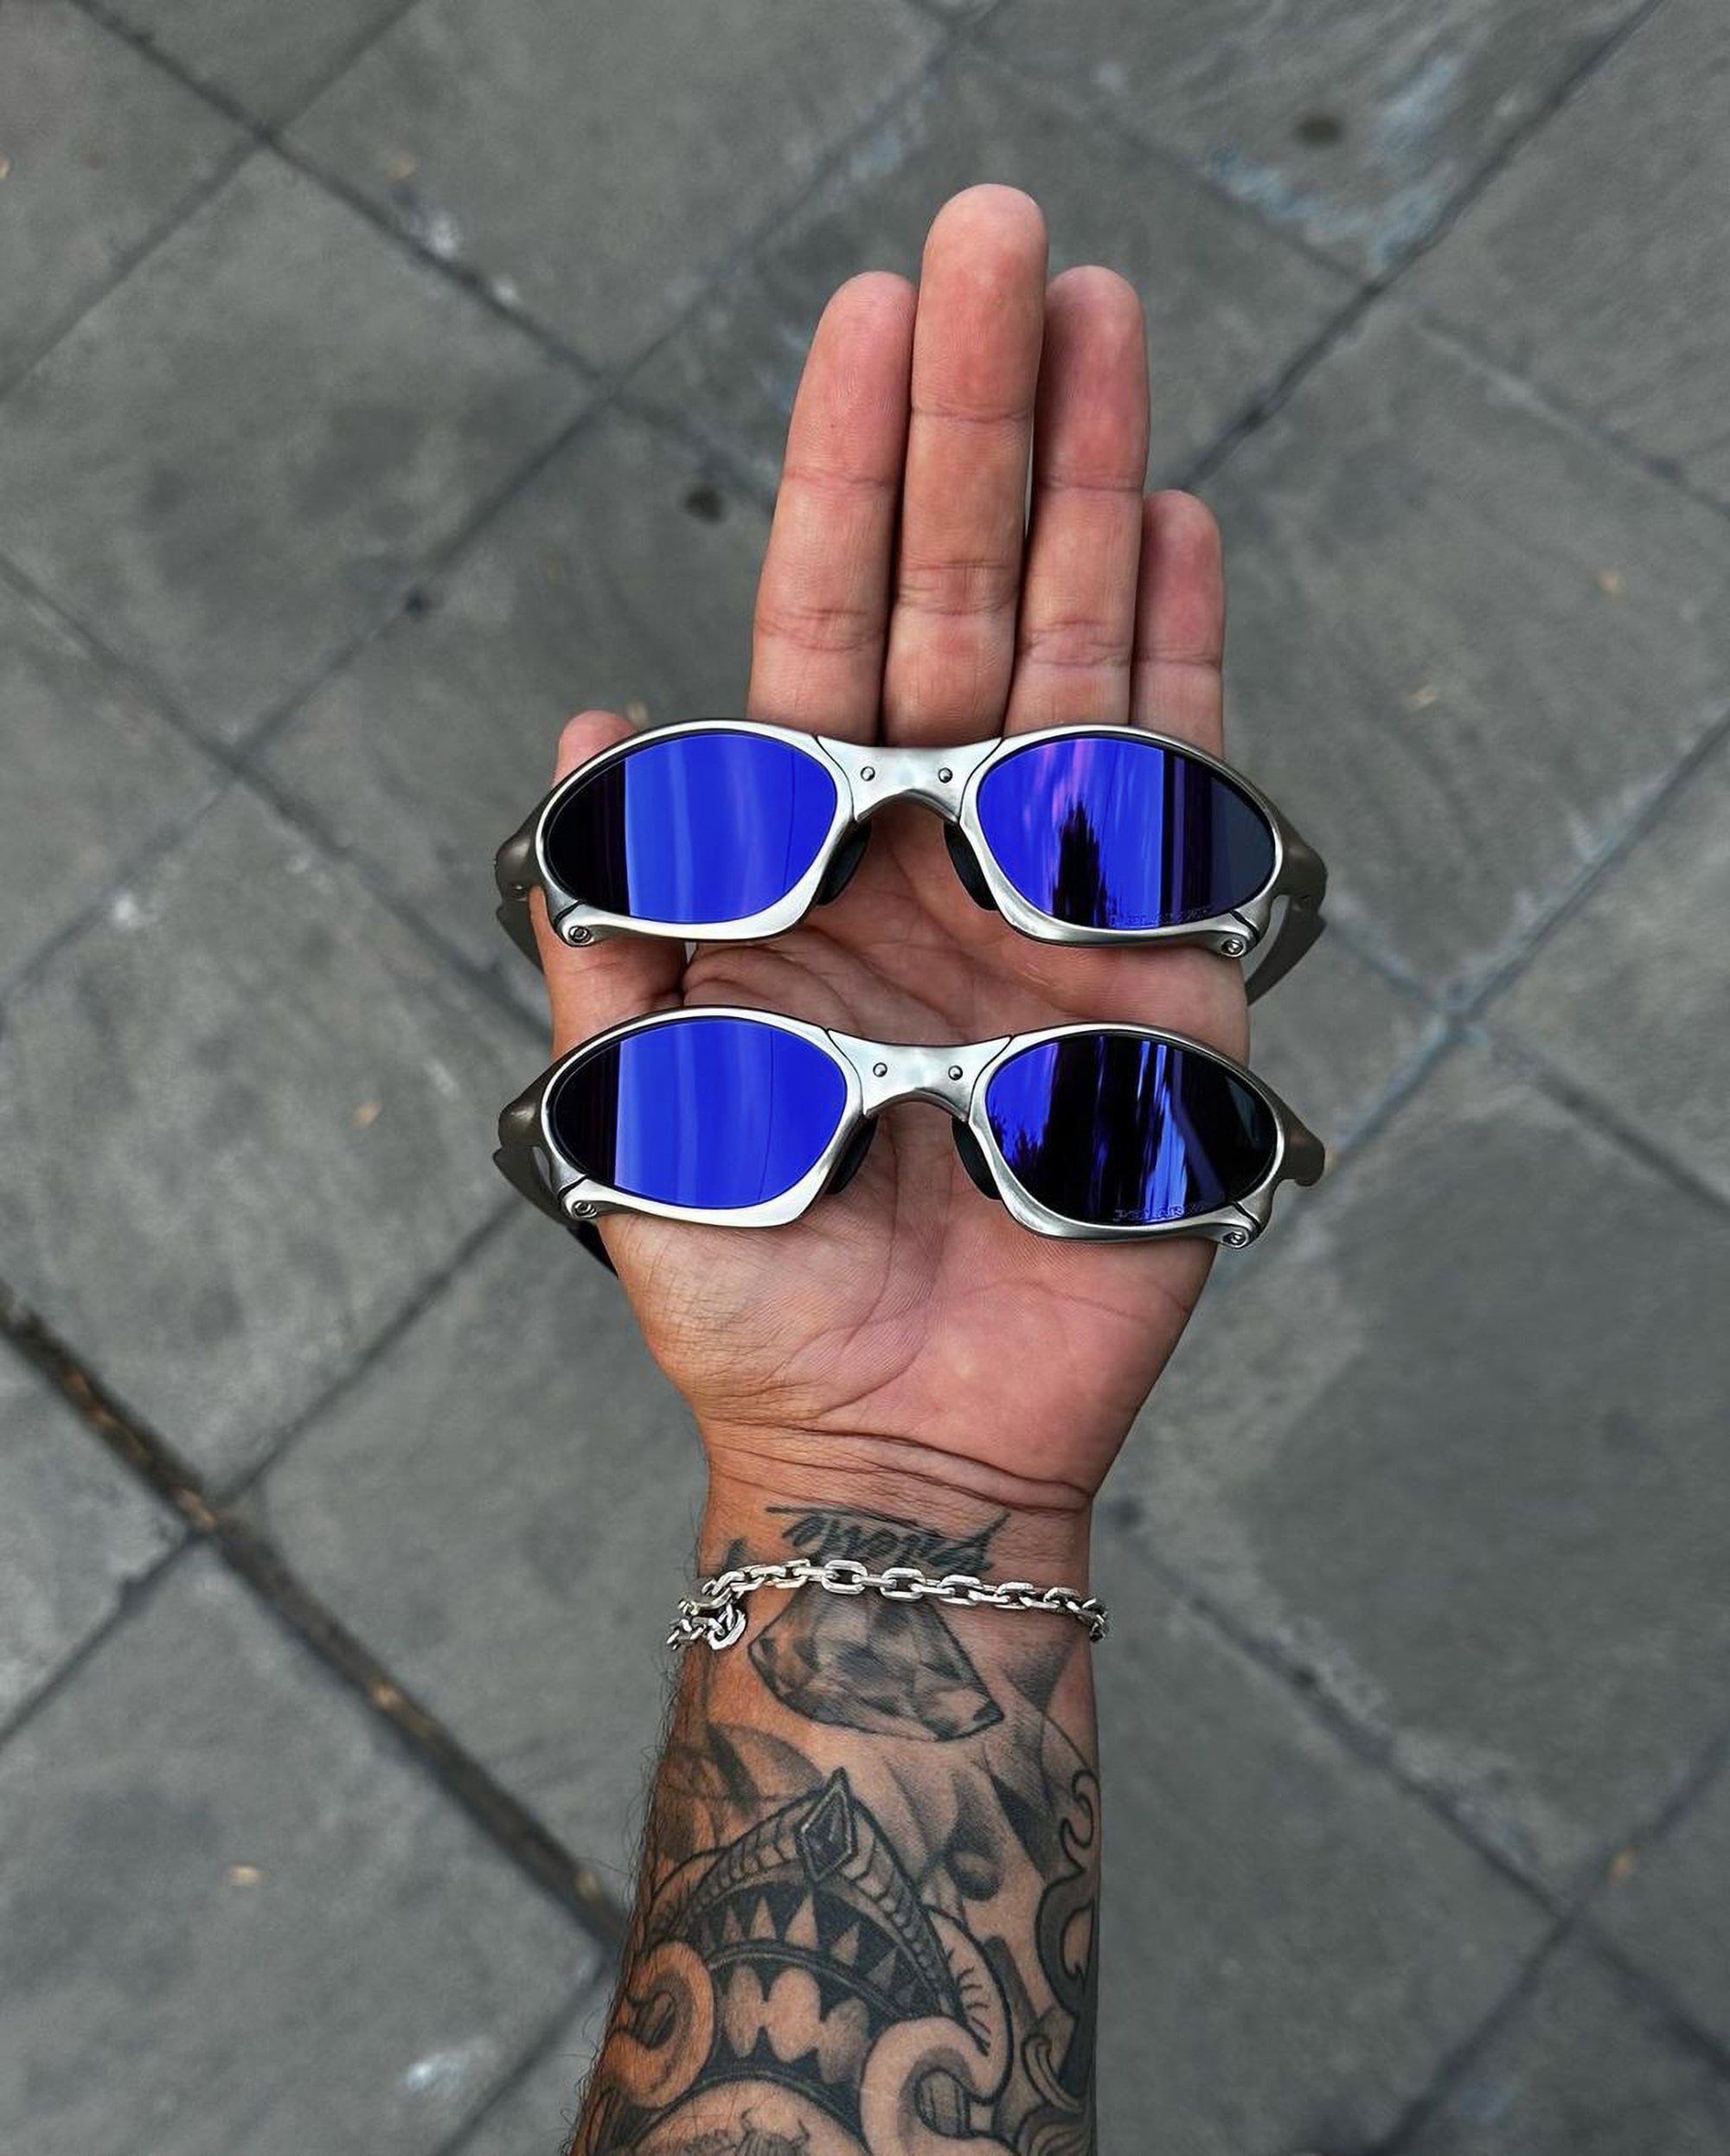 Oakley Frogskins Polarized Sunglasses 